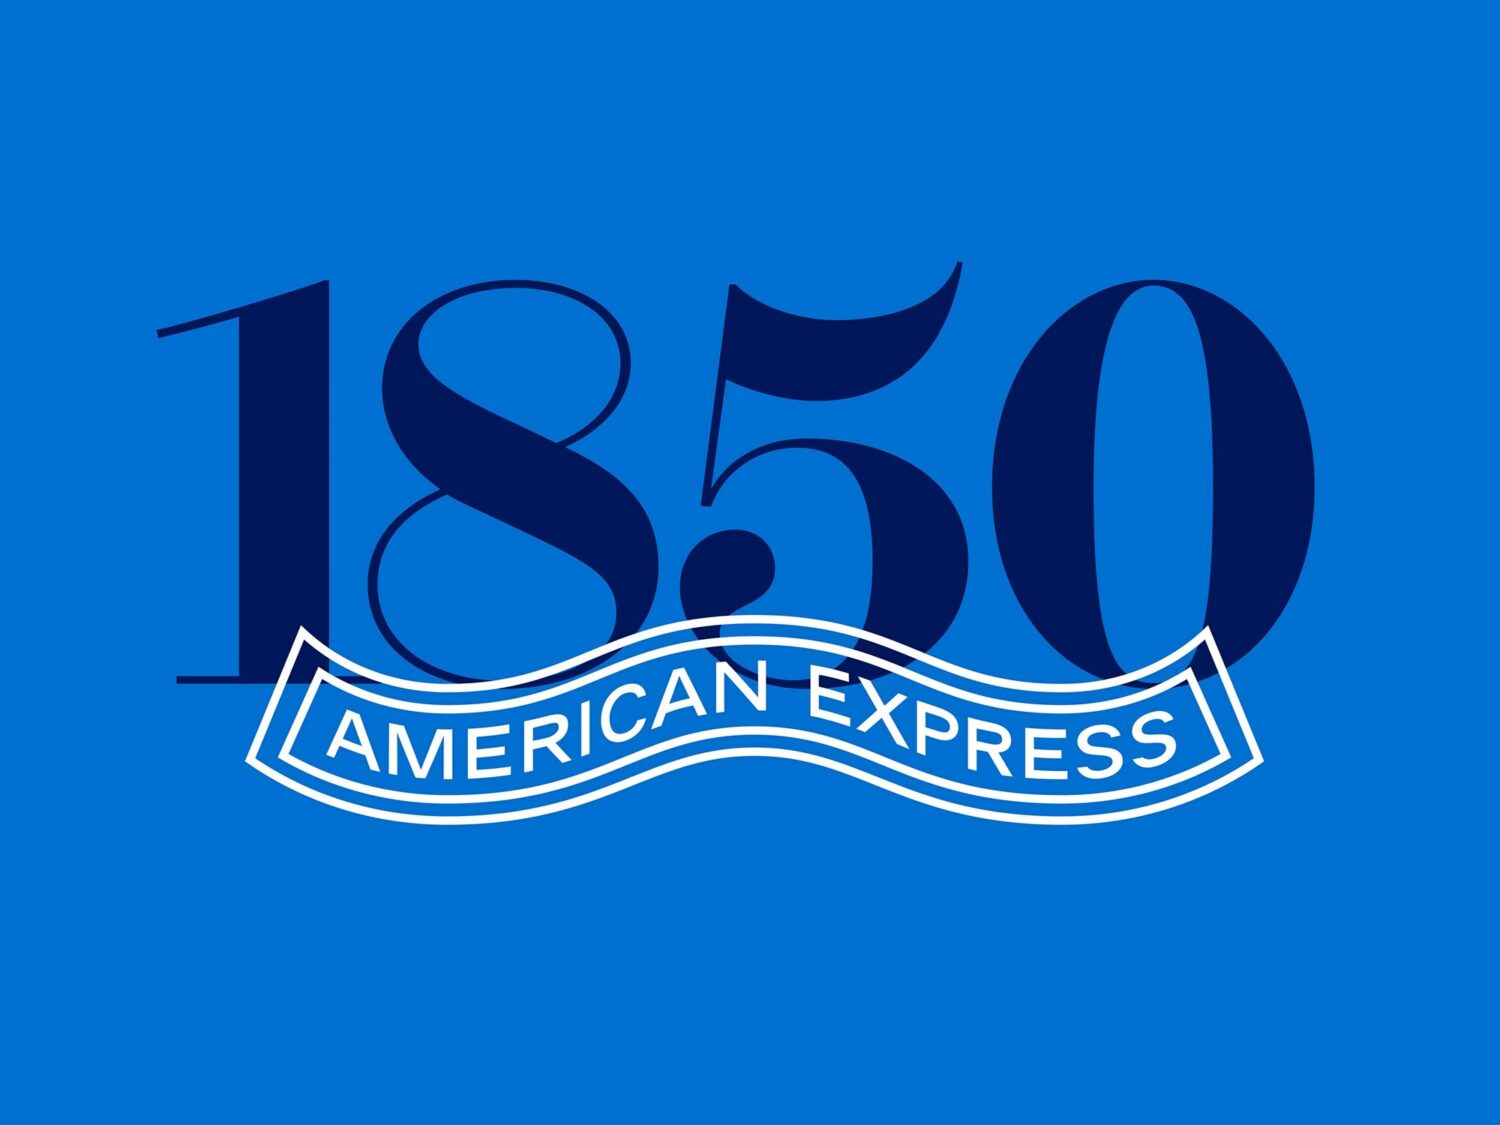 American Express – 1850